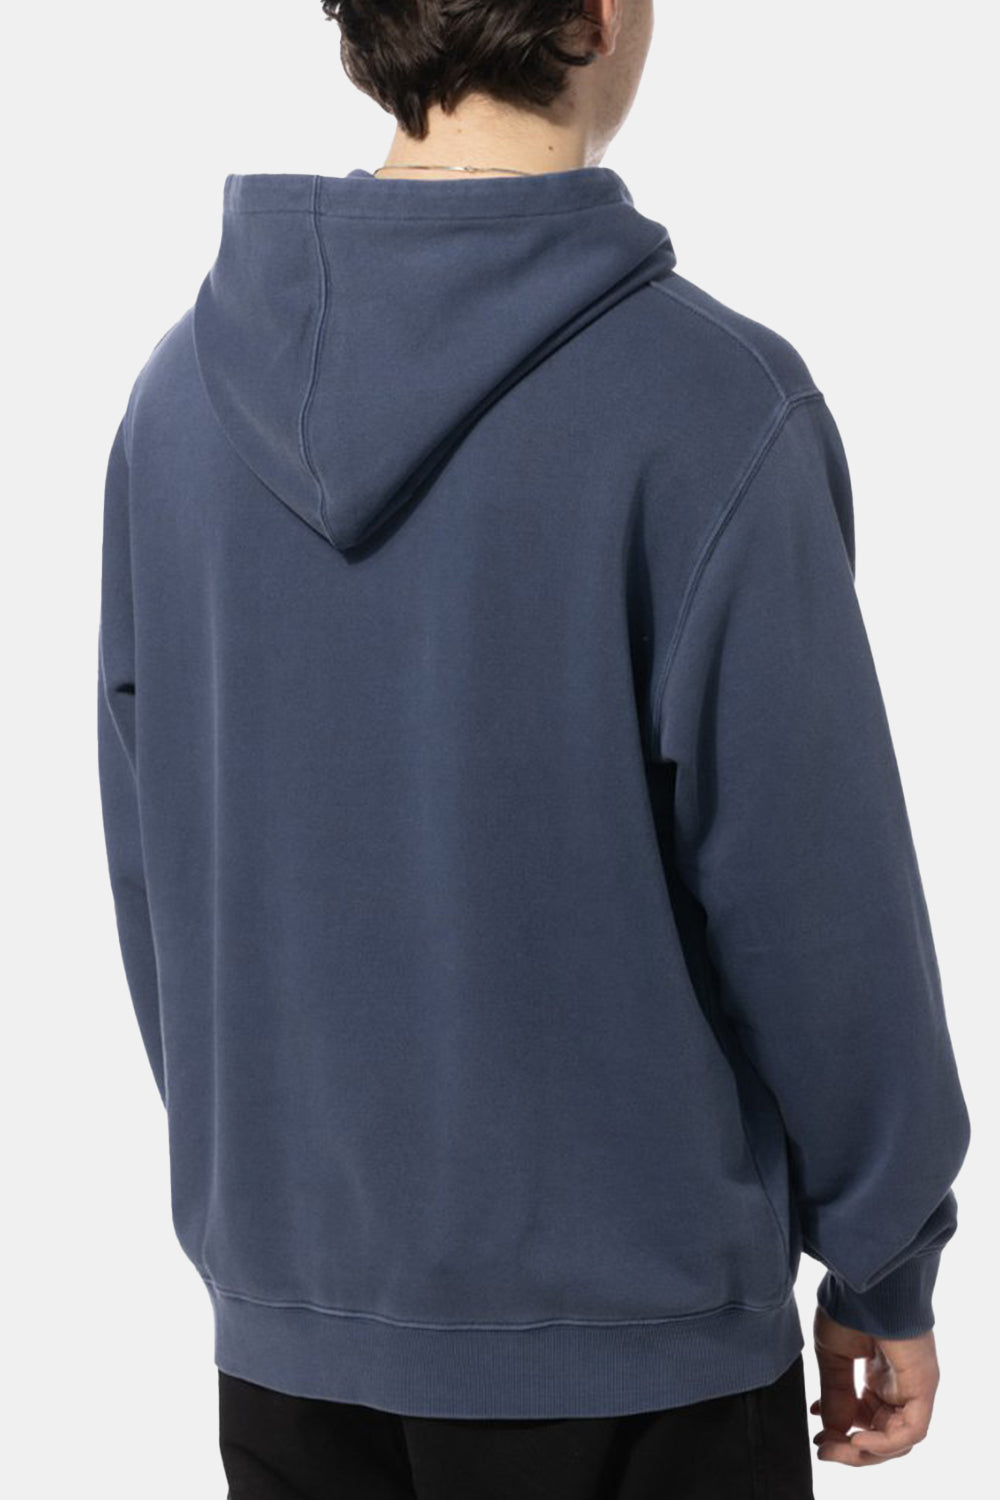 Gramicci One Point Hooded Sweatshirt (Navy Pigment)